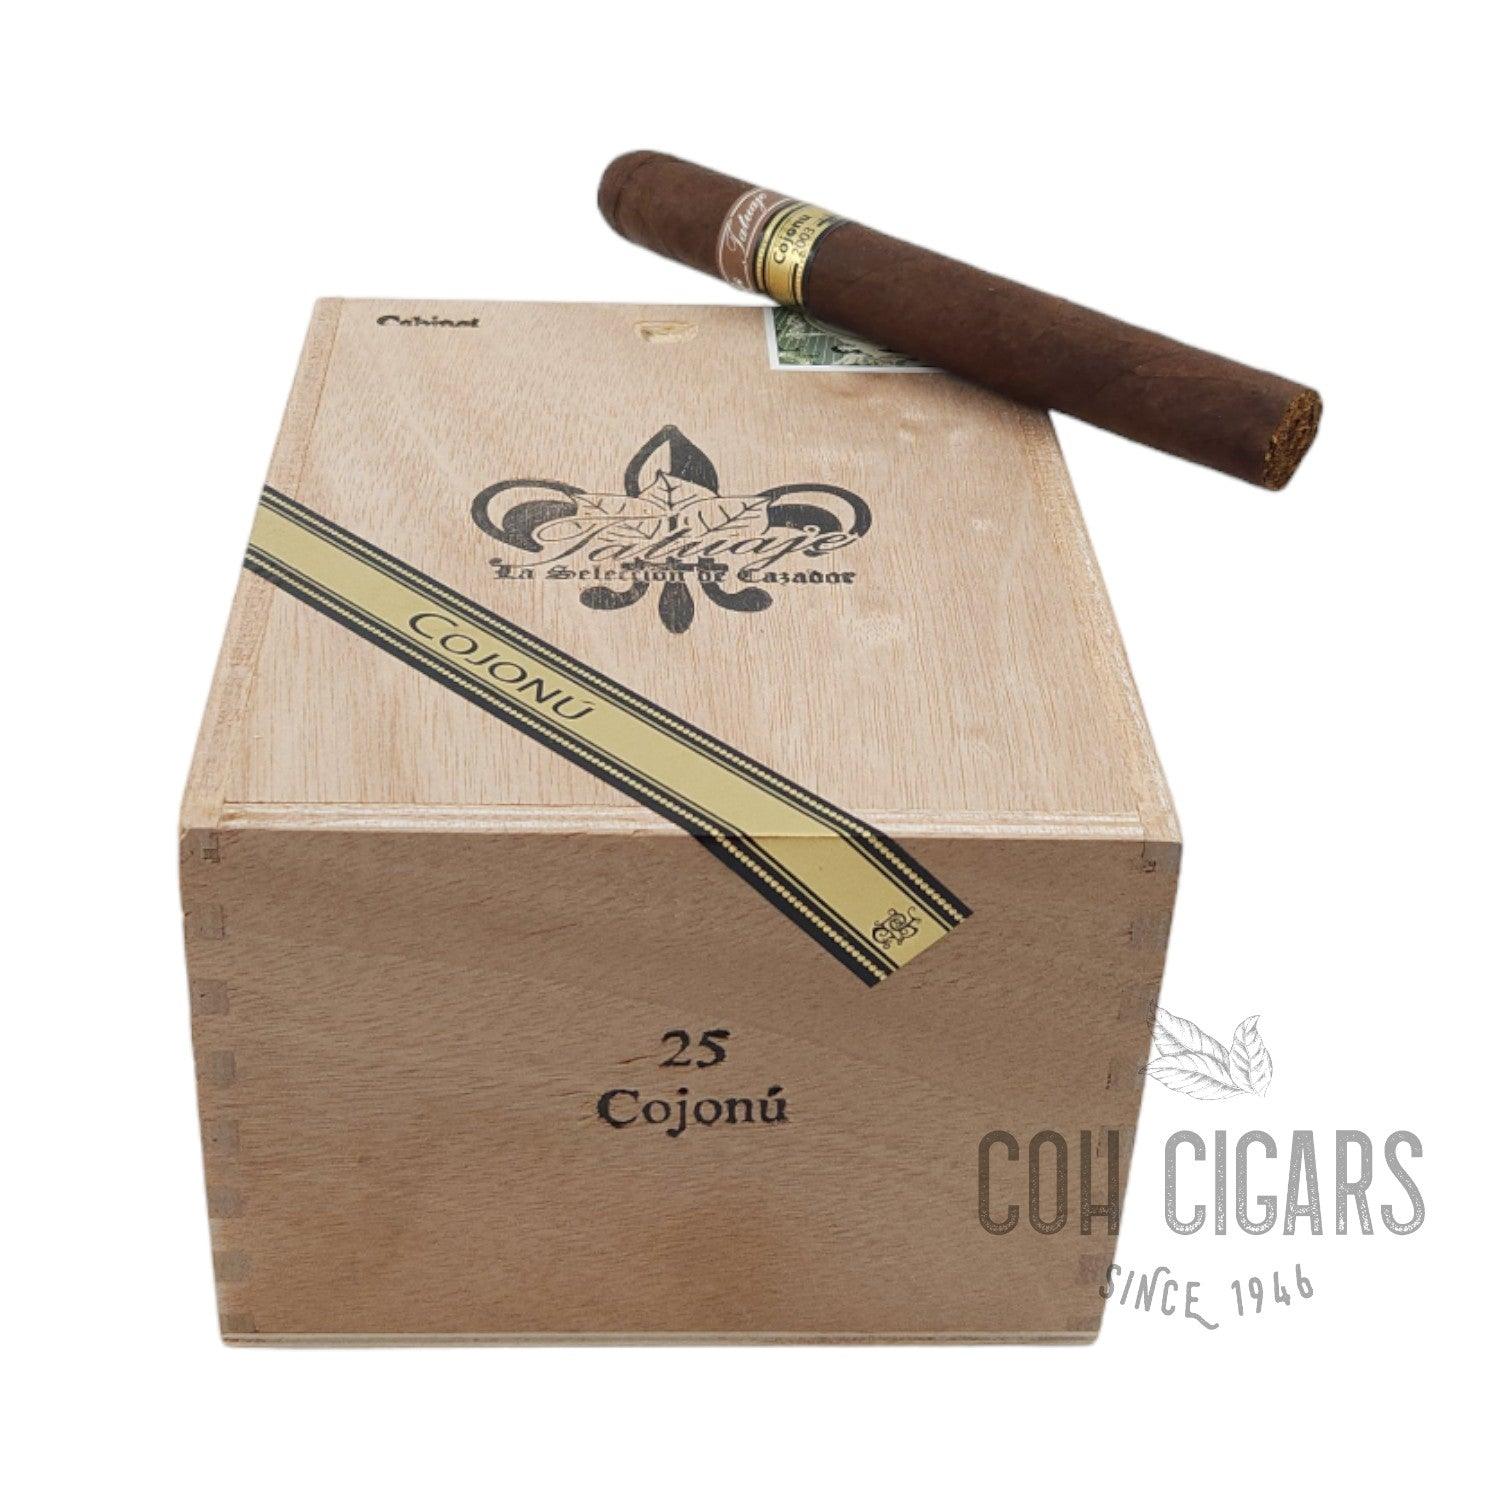 Tatuaje Cigar | Cojonu | Box 25 - HK CohCigars